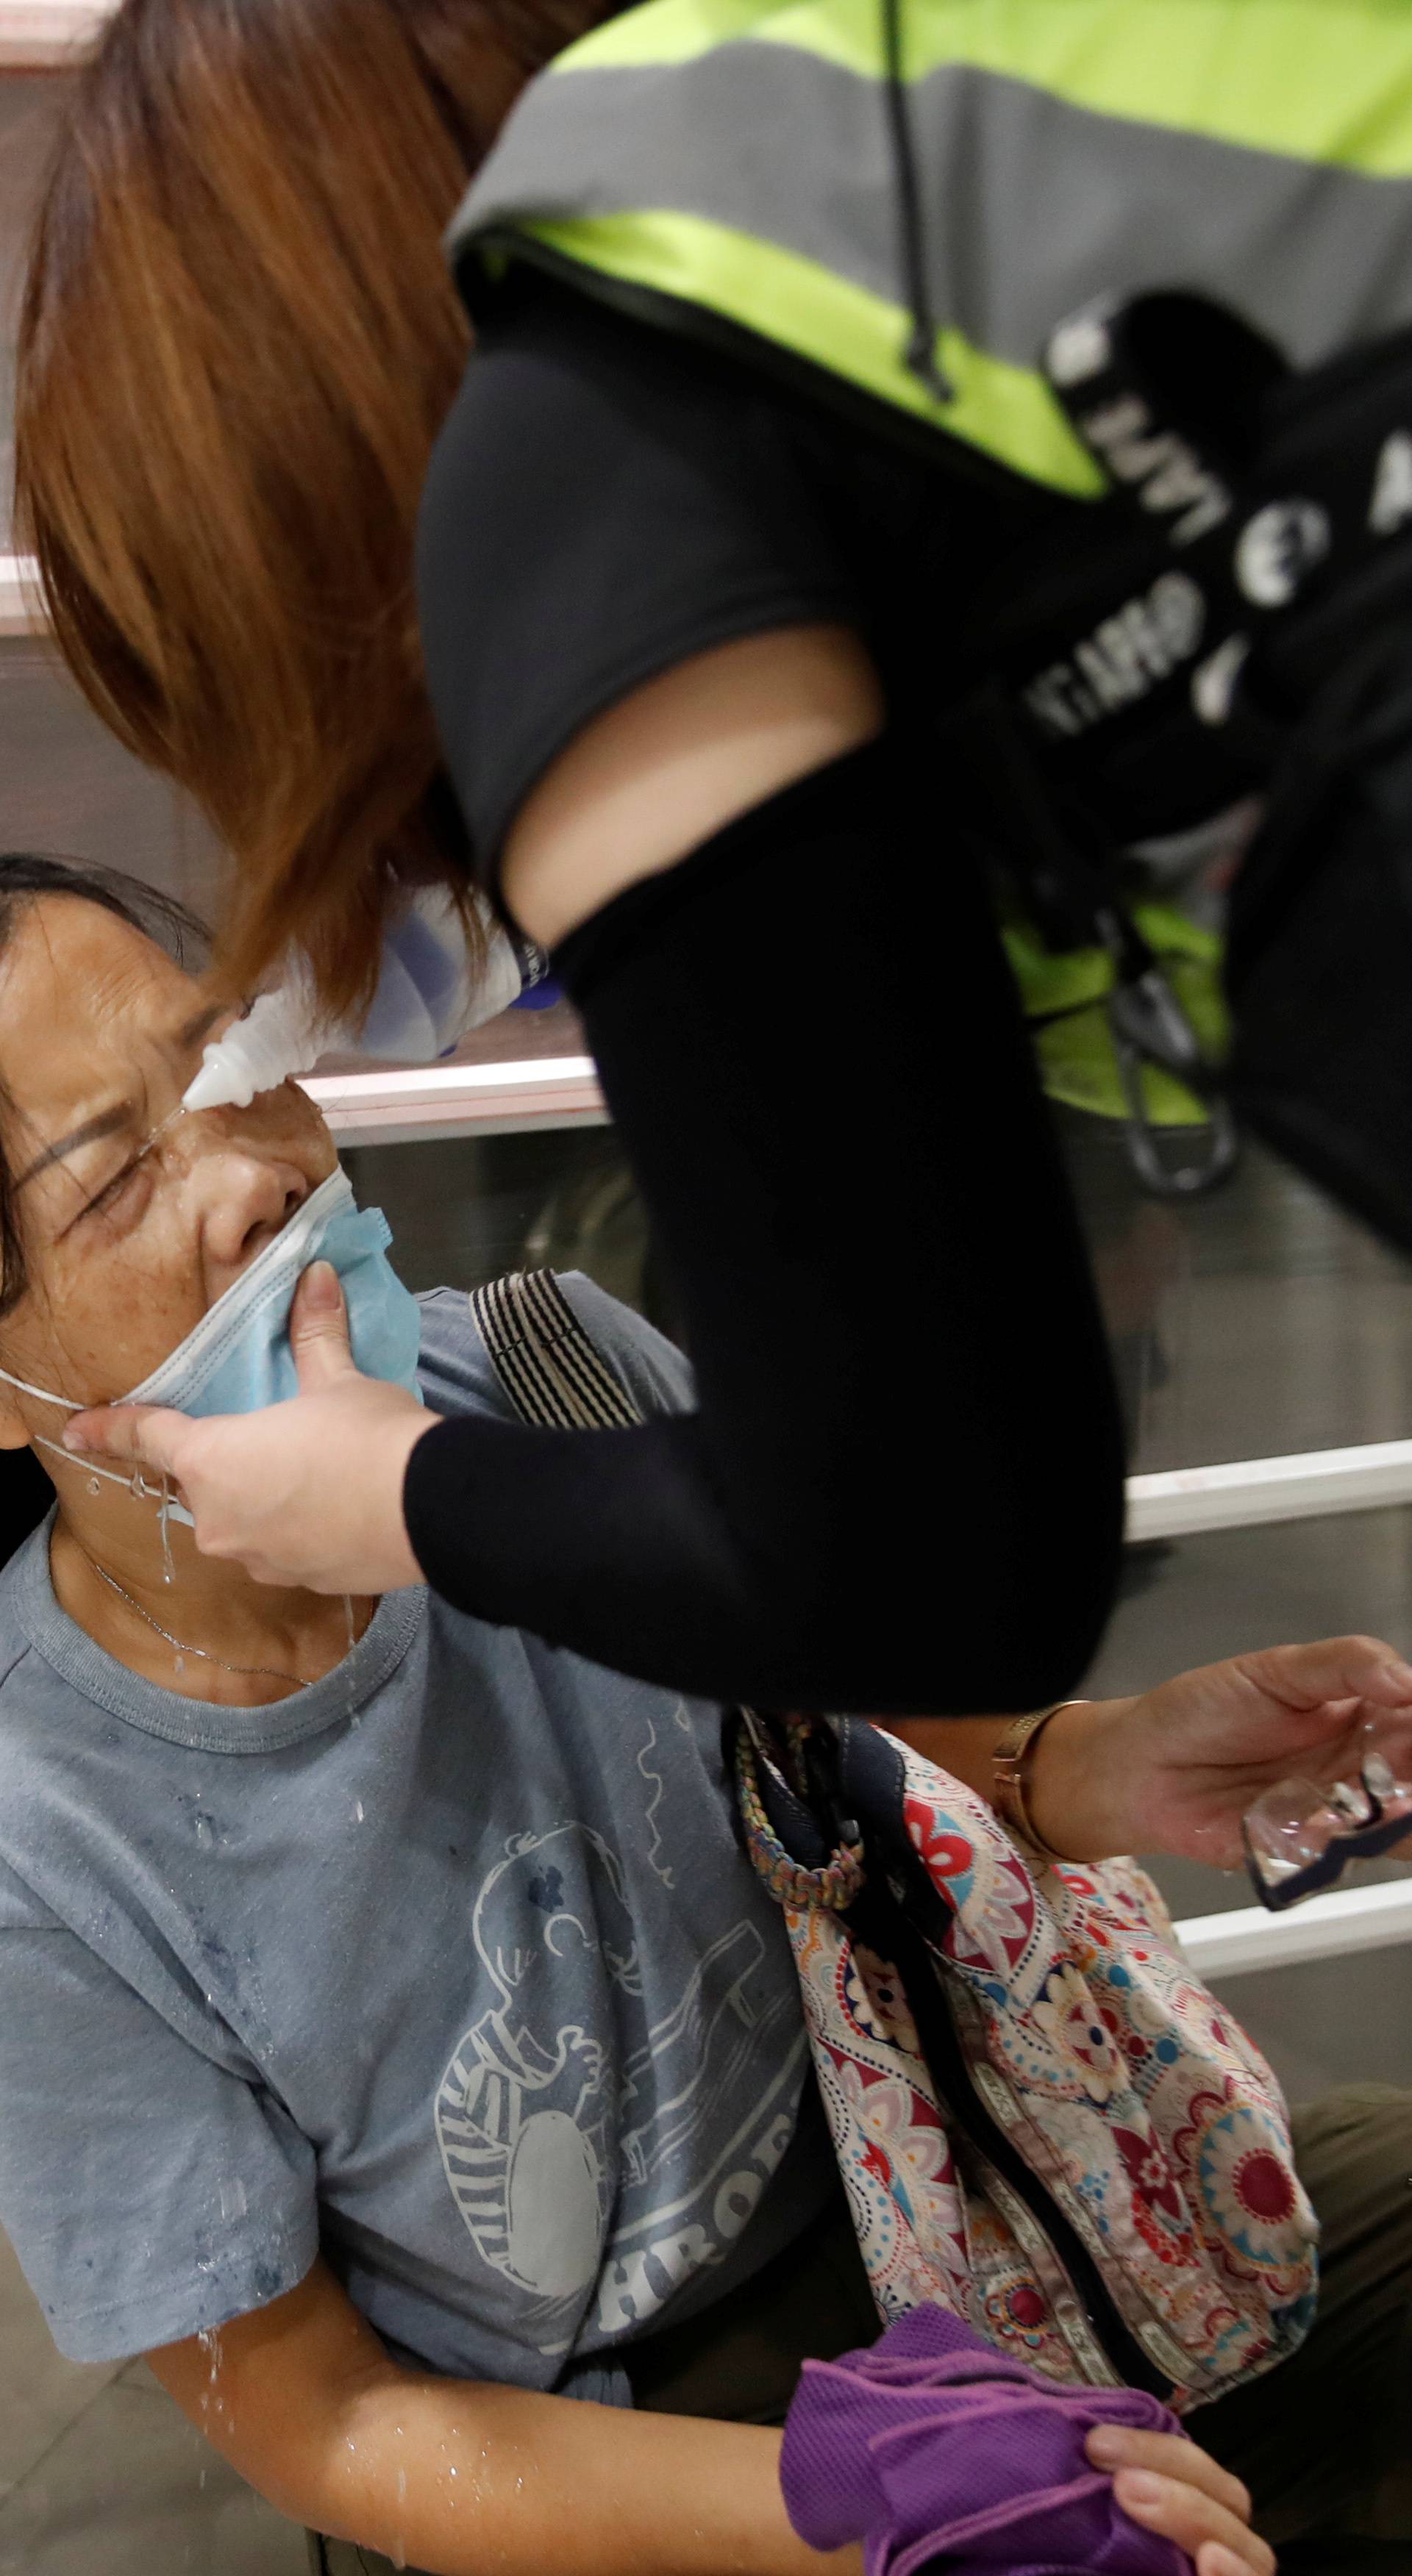 Vikend kaosa u Hong Kongu: Troje ljudi bori se za život